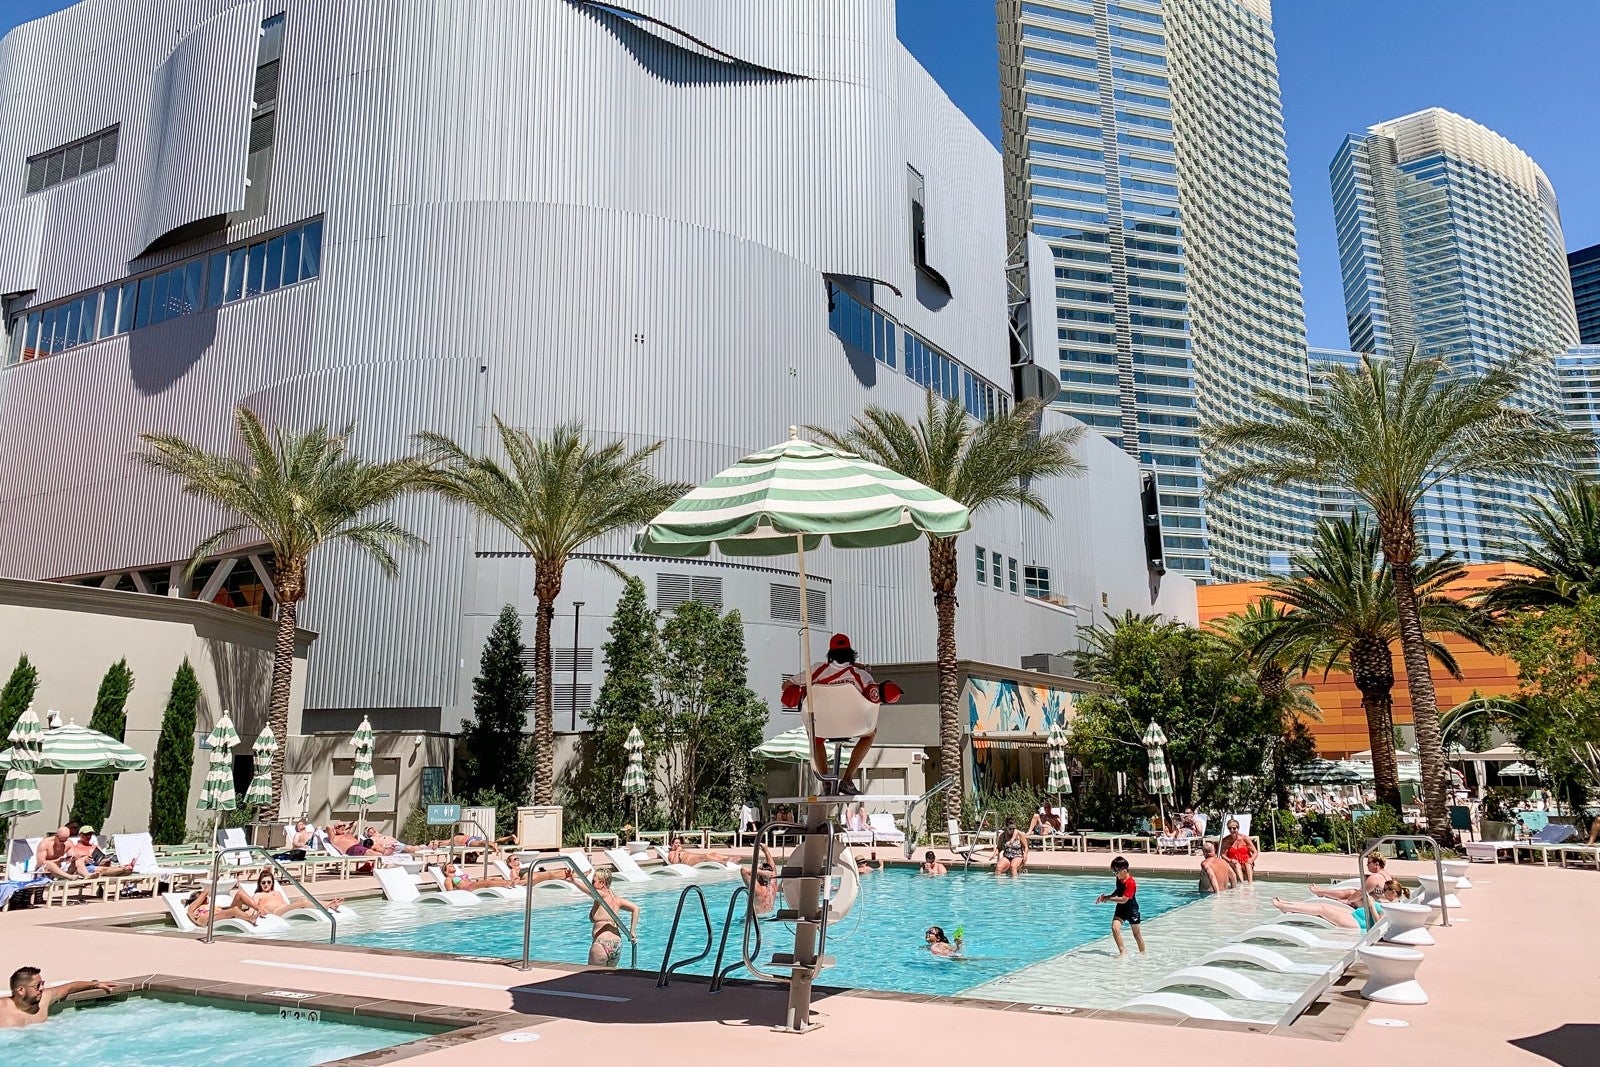 Park MGM Las Vegas pool